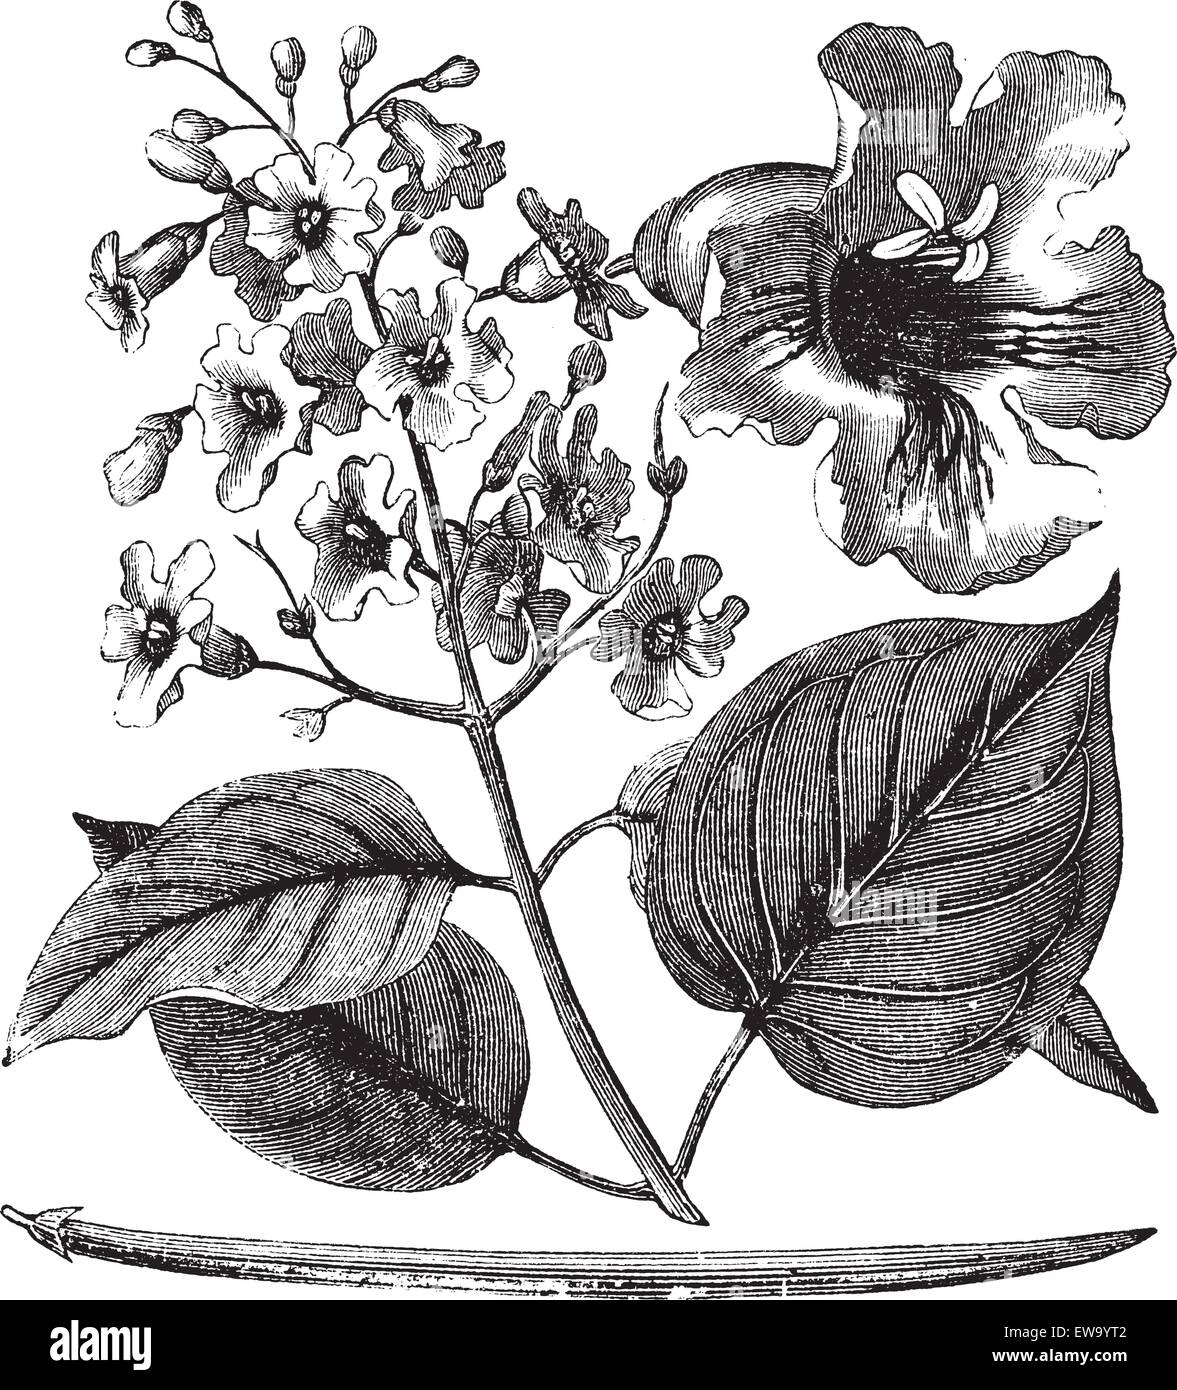 Catalpa bignonioides or cigar tree vintage engraving. Old engraved illustration of blossoms of catalpa tree. Stock Vector